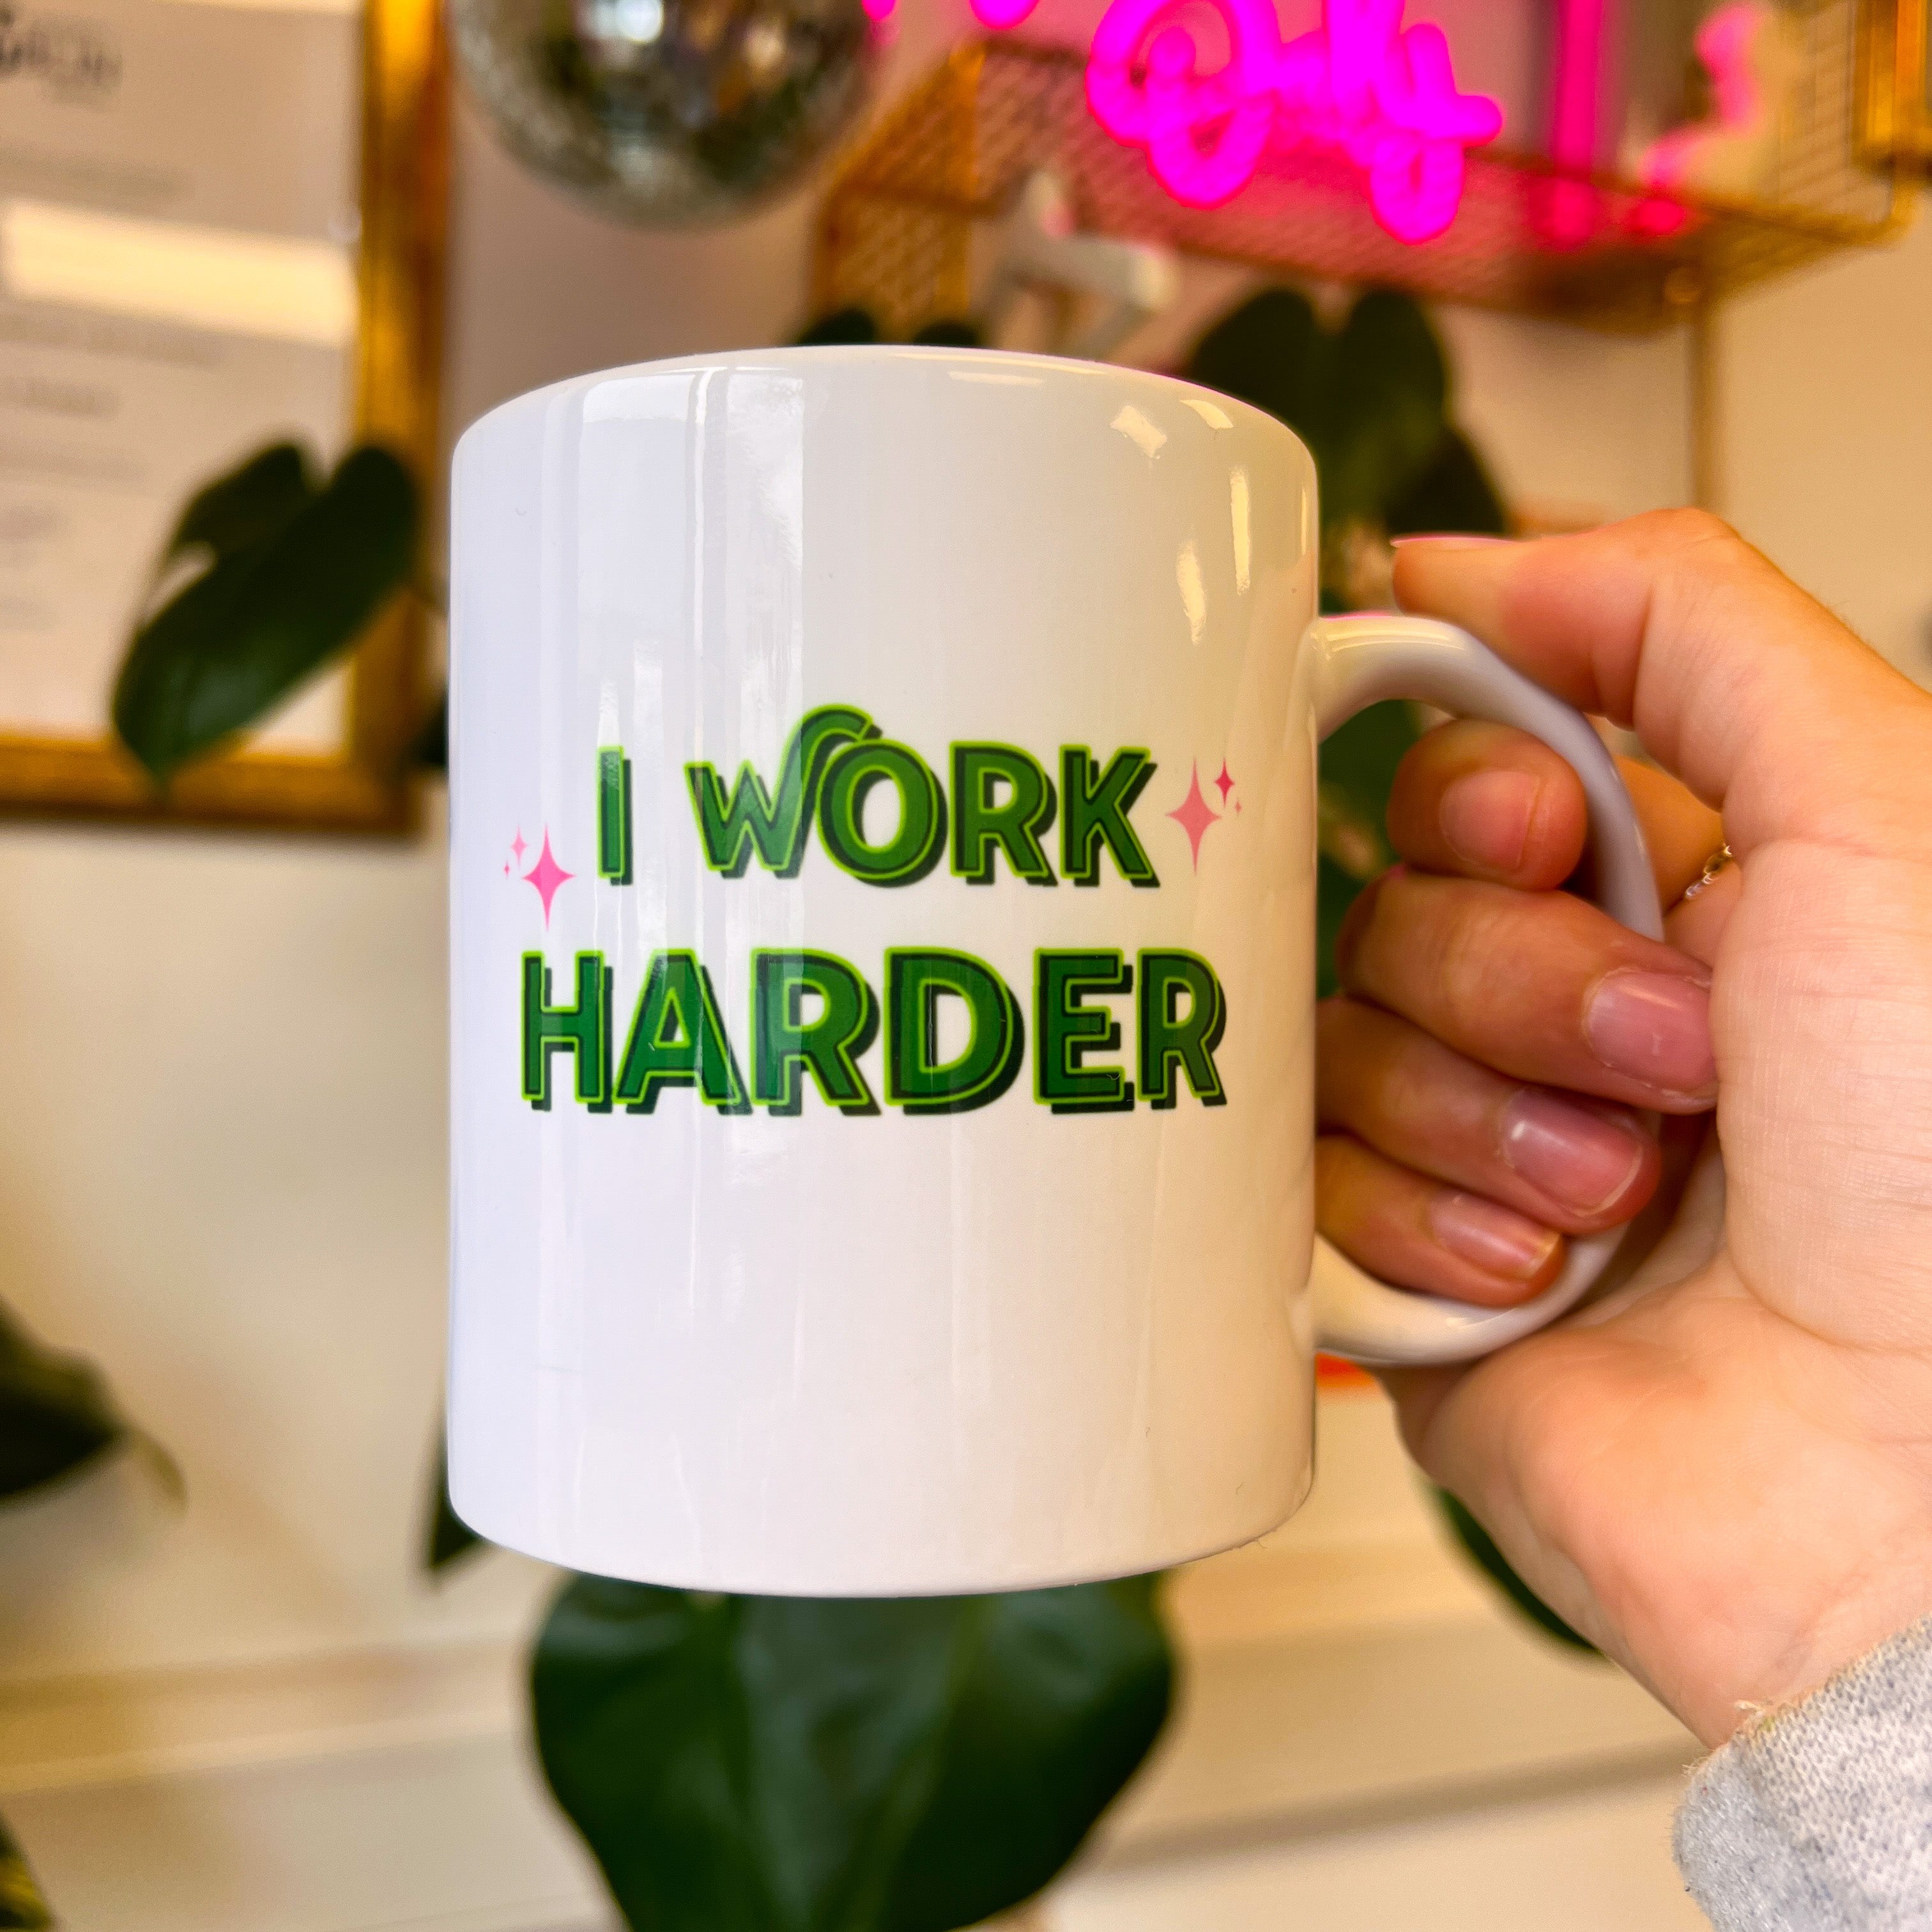 You work harder faulty mug